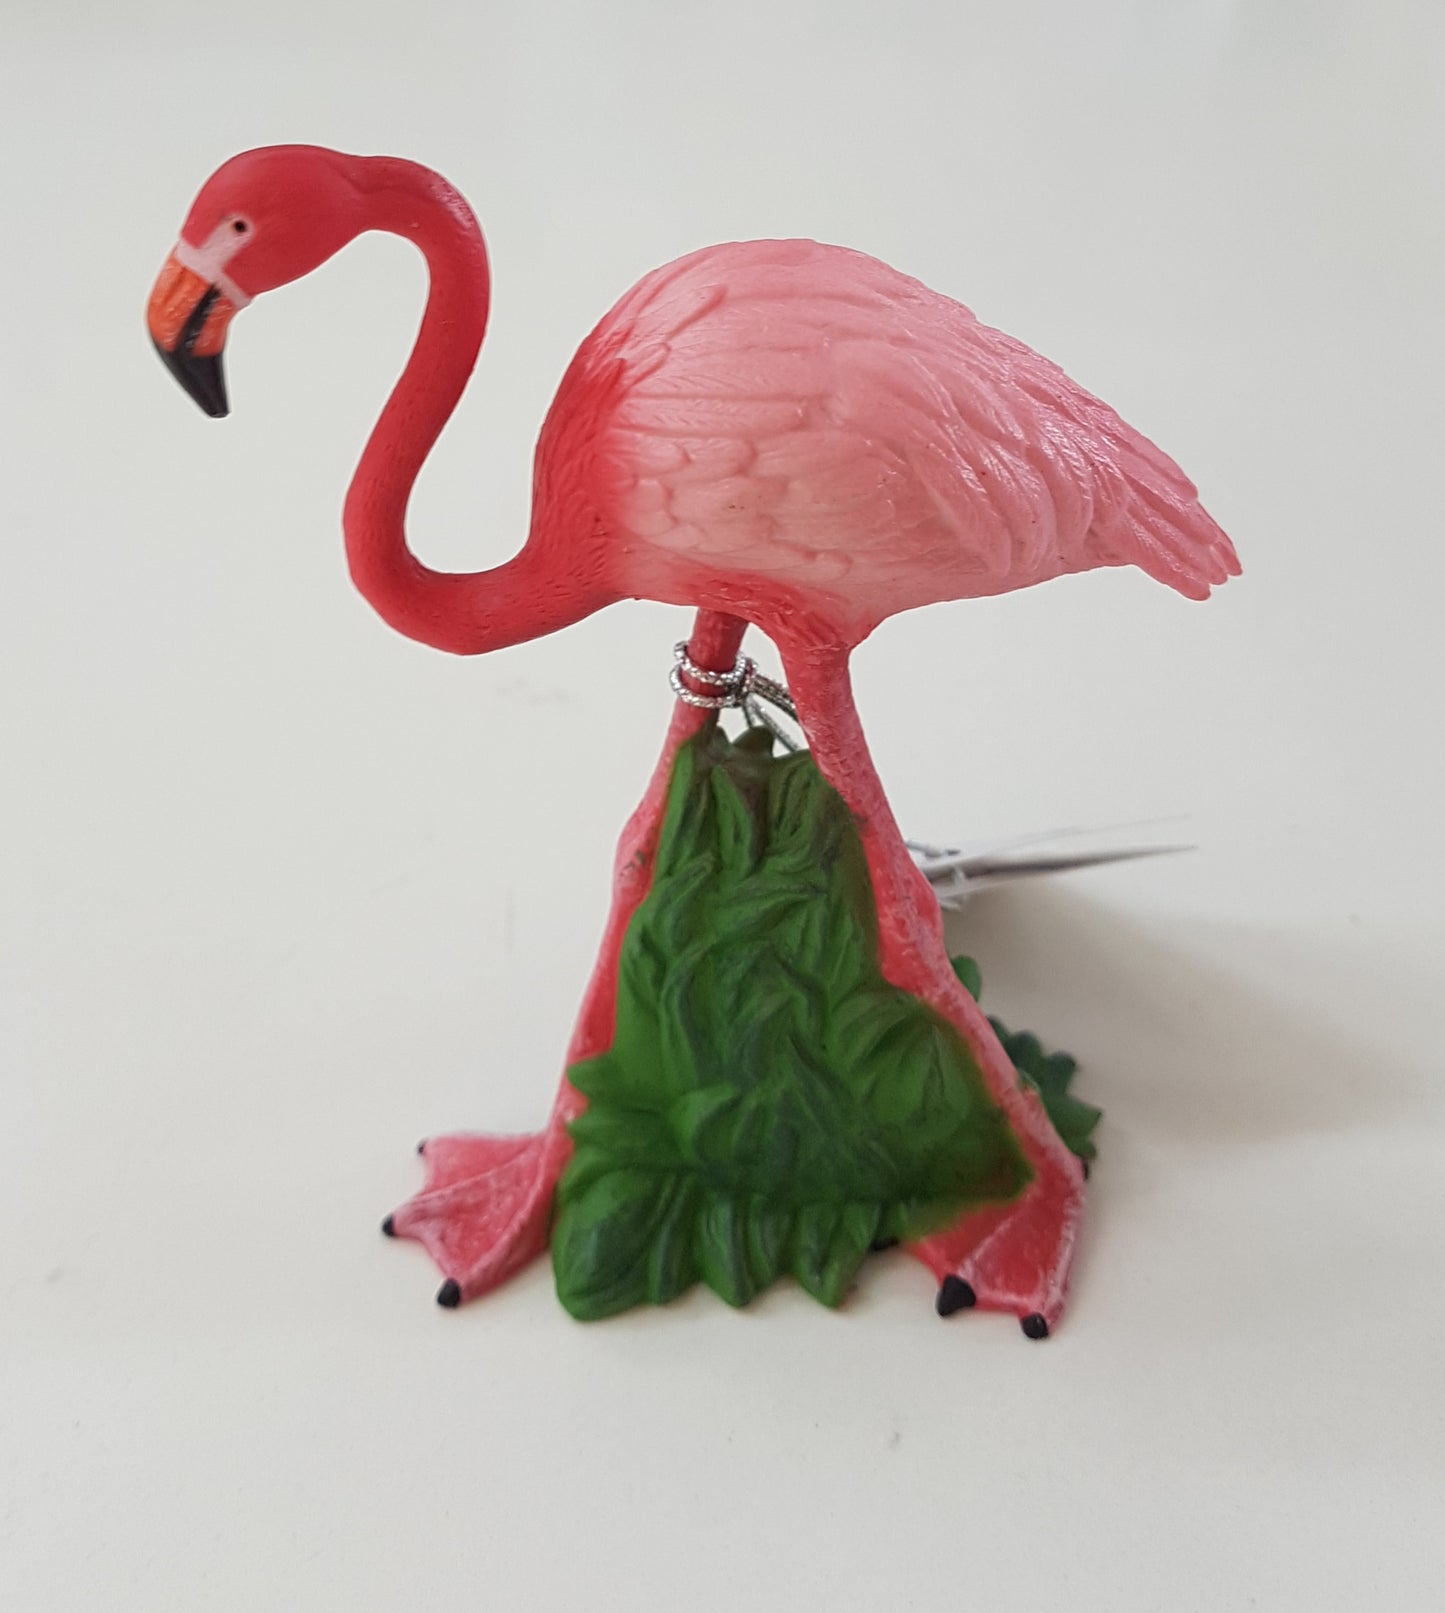 Flamingo figurine